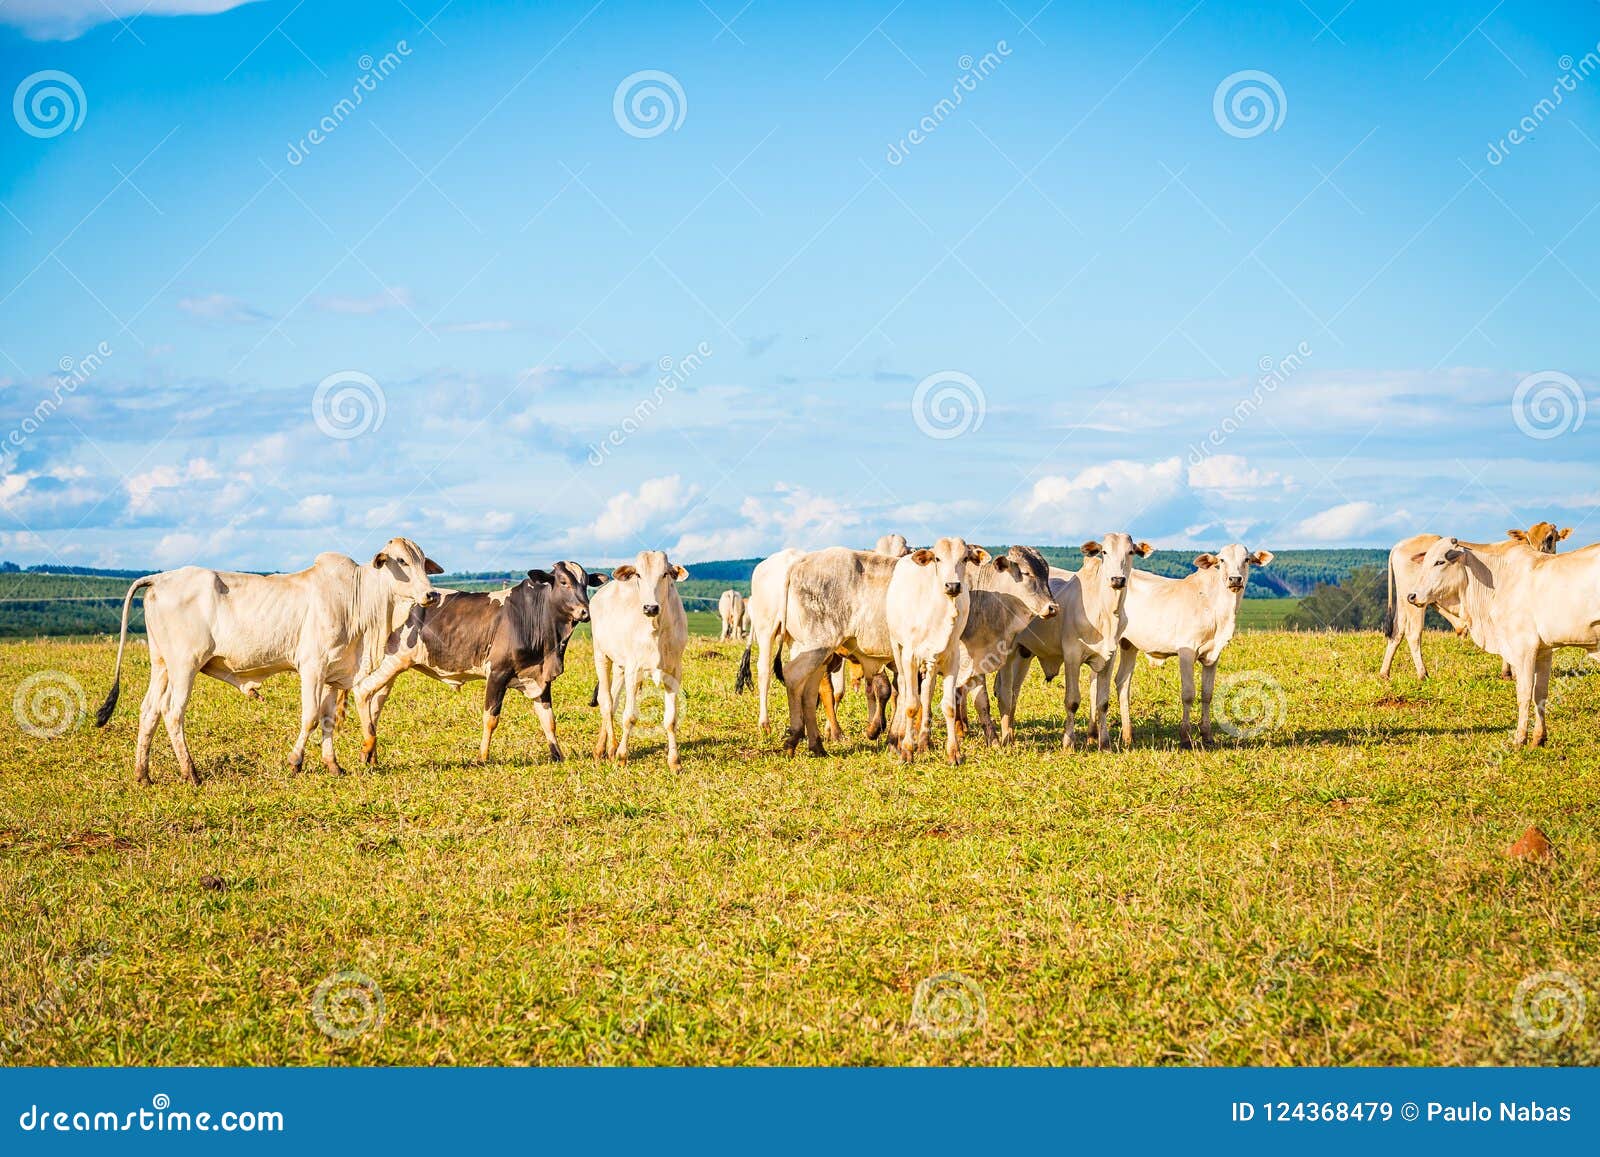 brazilian nelore catle on pasture in brazil`s countryside.